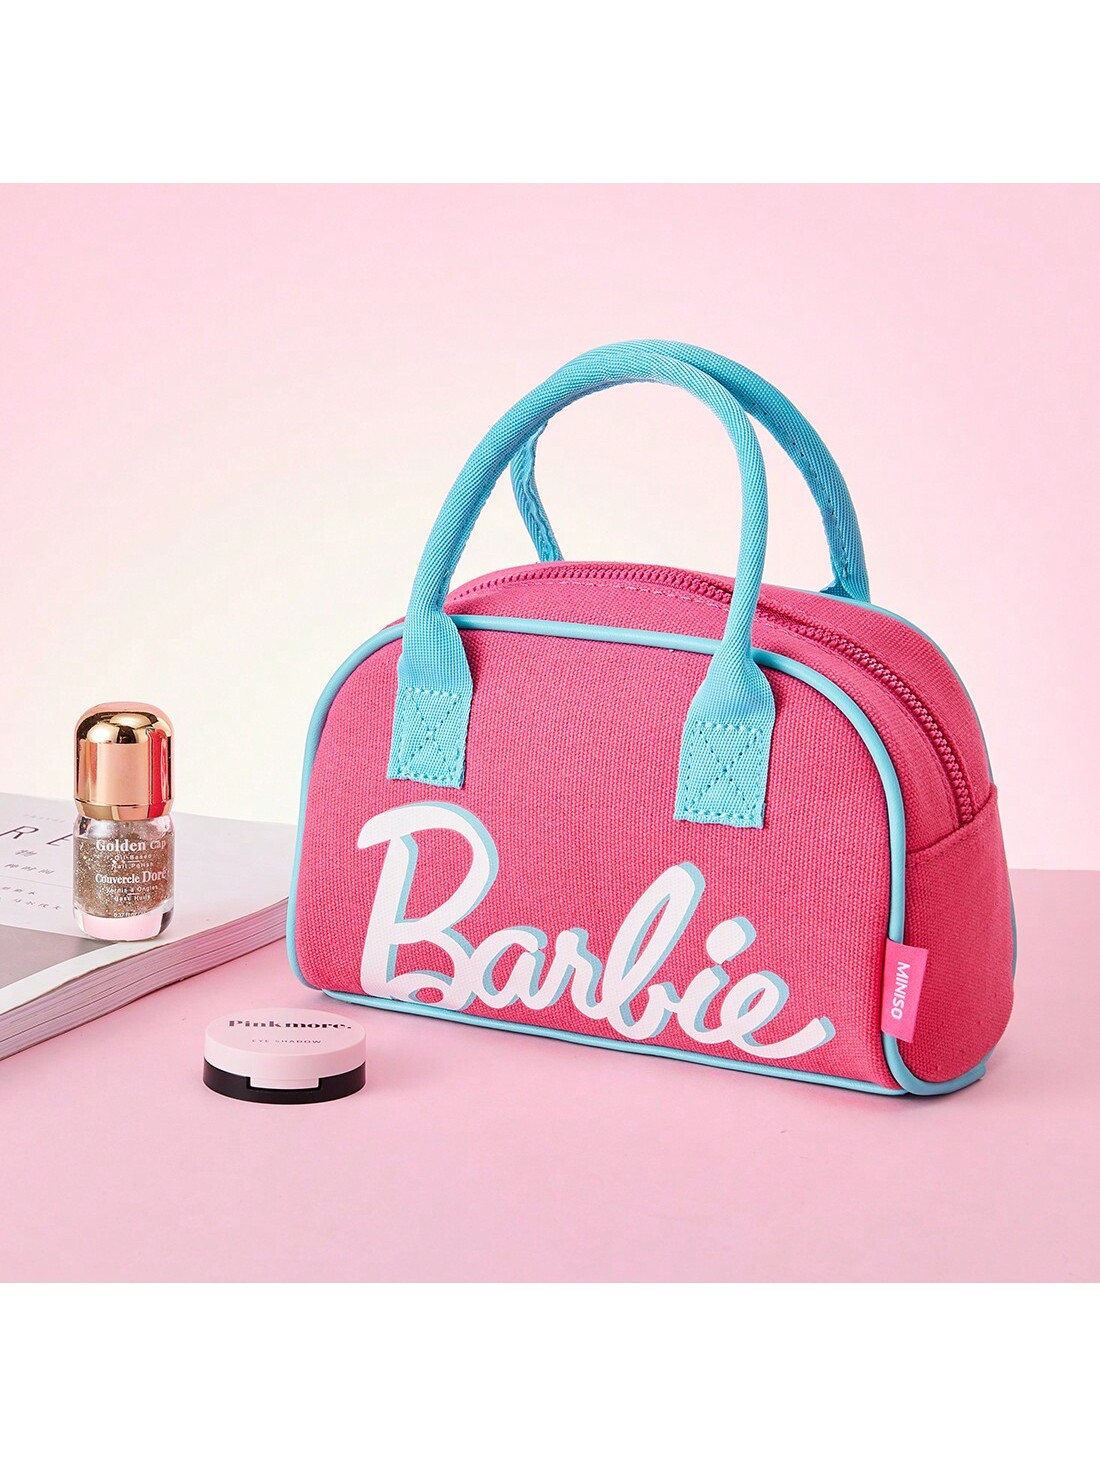 Булочки Miniso Barbie Daylight Glow Series (розовые), розовый miniso barbie series черный